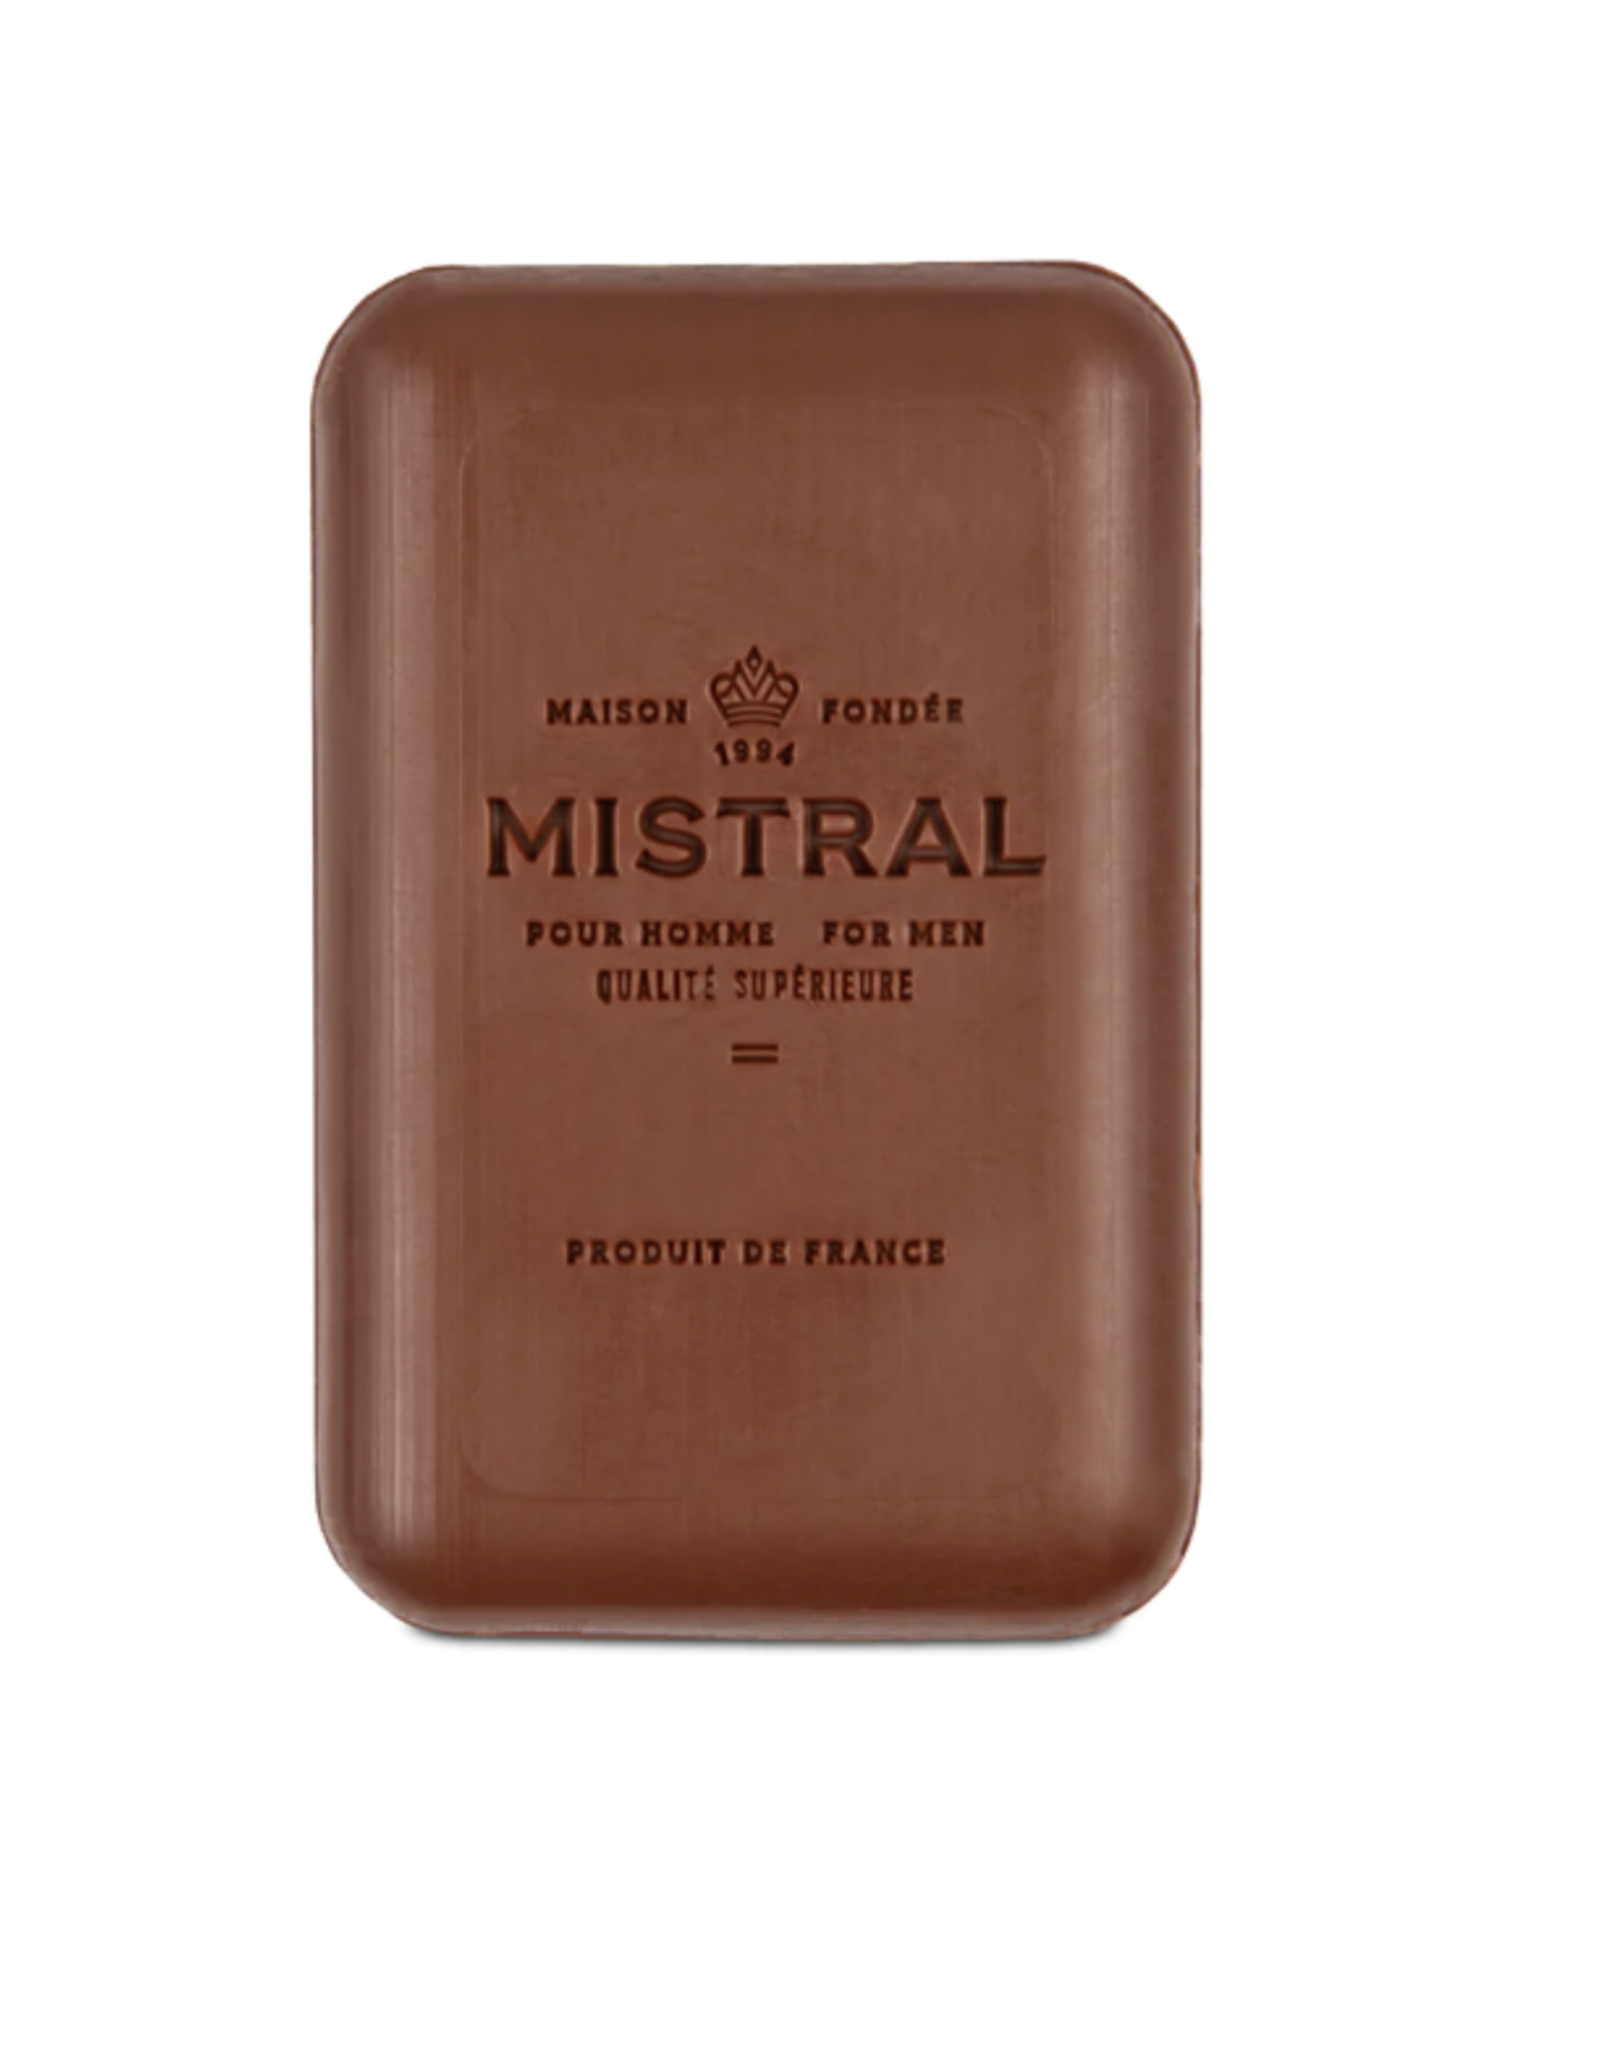 Mahogany Rum - Mistral Men's Collection Soap 8.8 oz